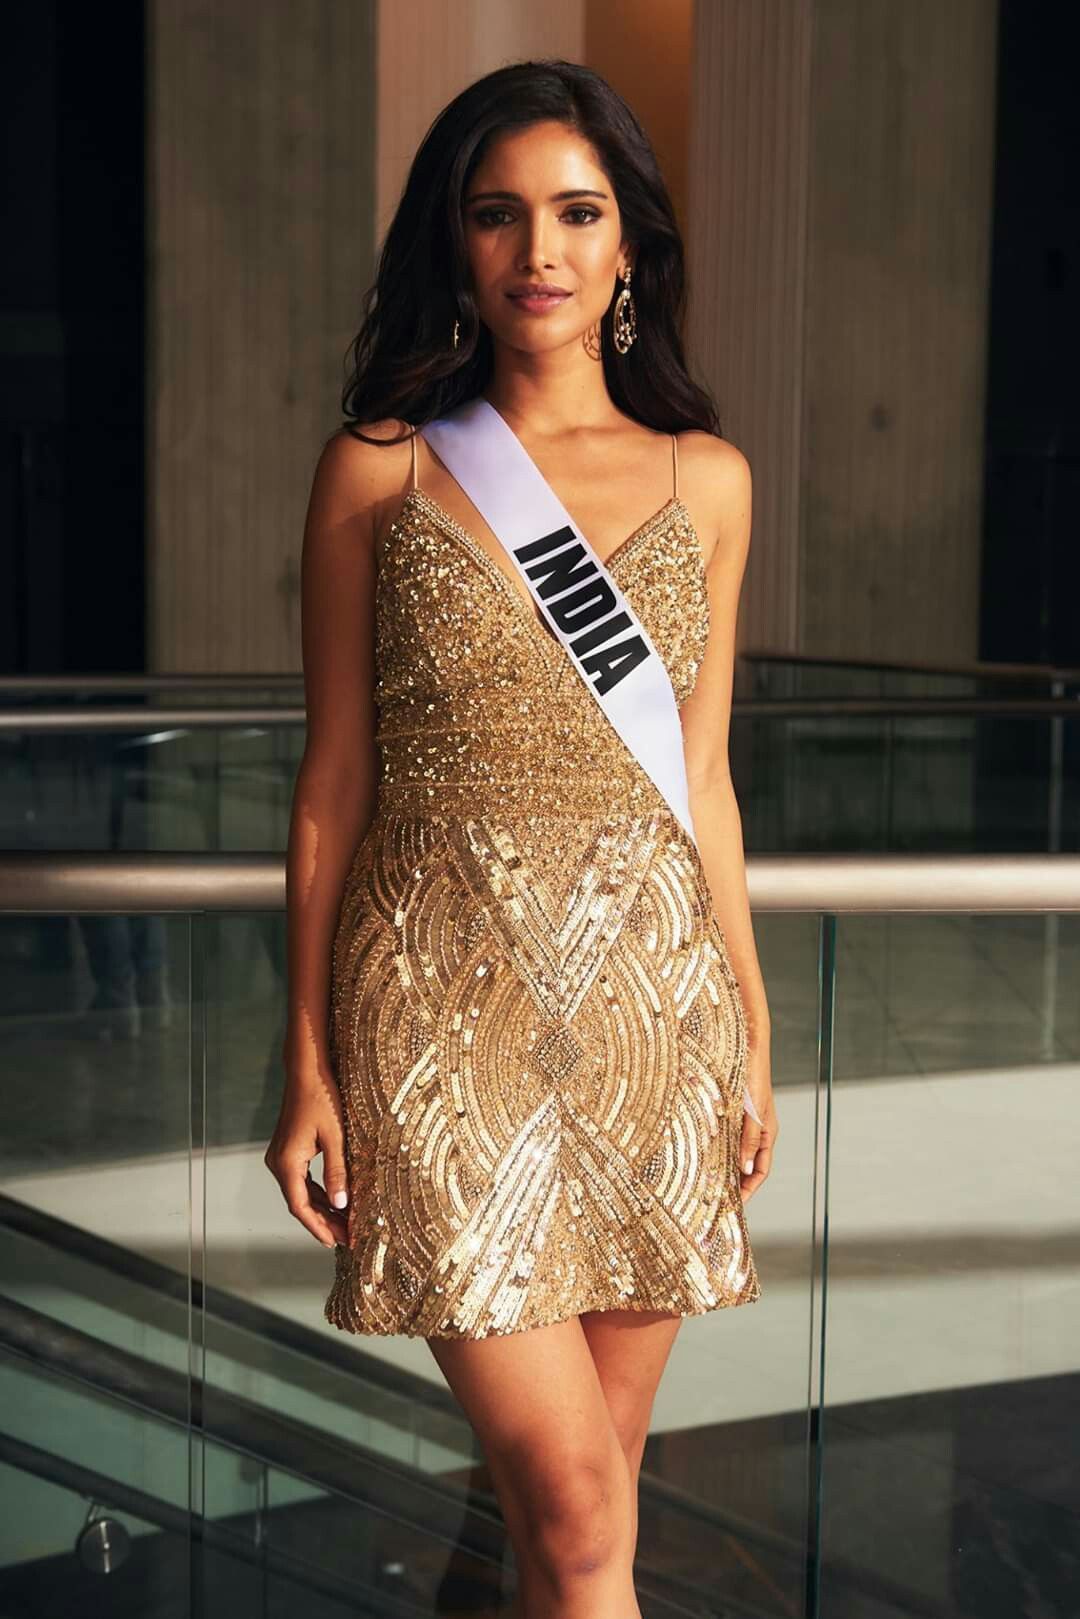 Vartika Singh, Miss India 2019 Photohoot in fashion by Sherri Hill. Beauty girl, Miss universe india, Fashion